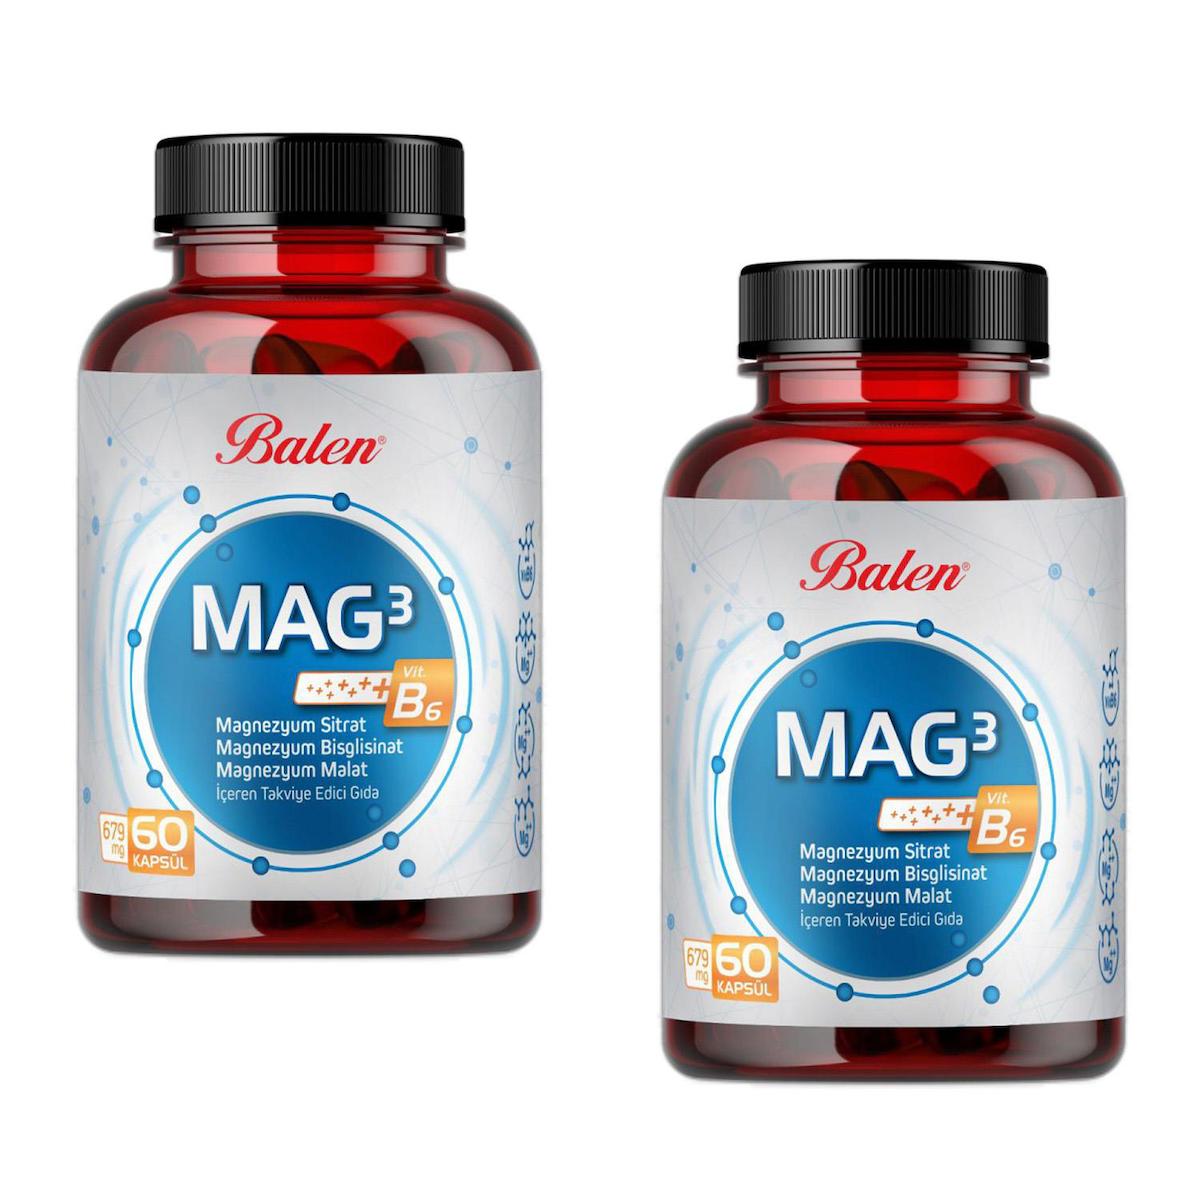 Balen Mag 3 Magnezyum Sitrat & Bisglisinat & Malat Sade Unisex Vitamin 60 Kapsül